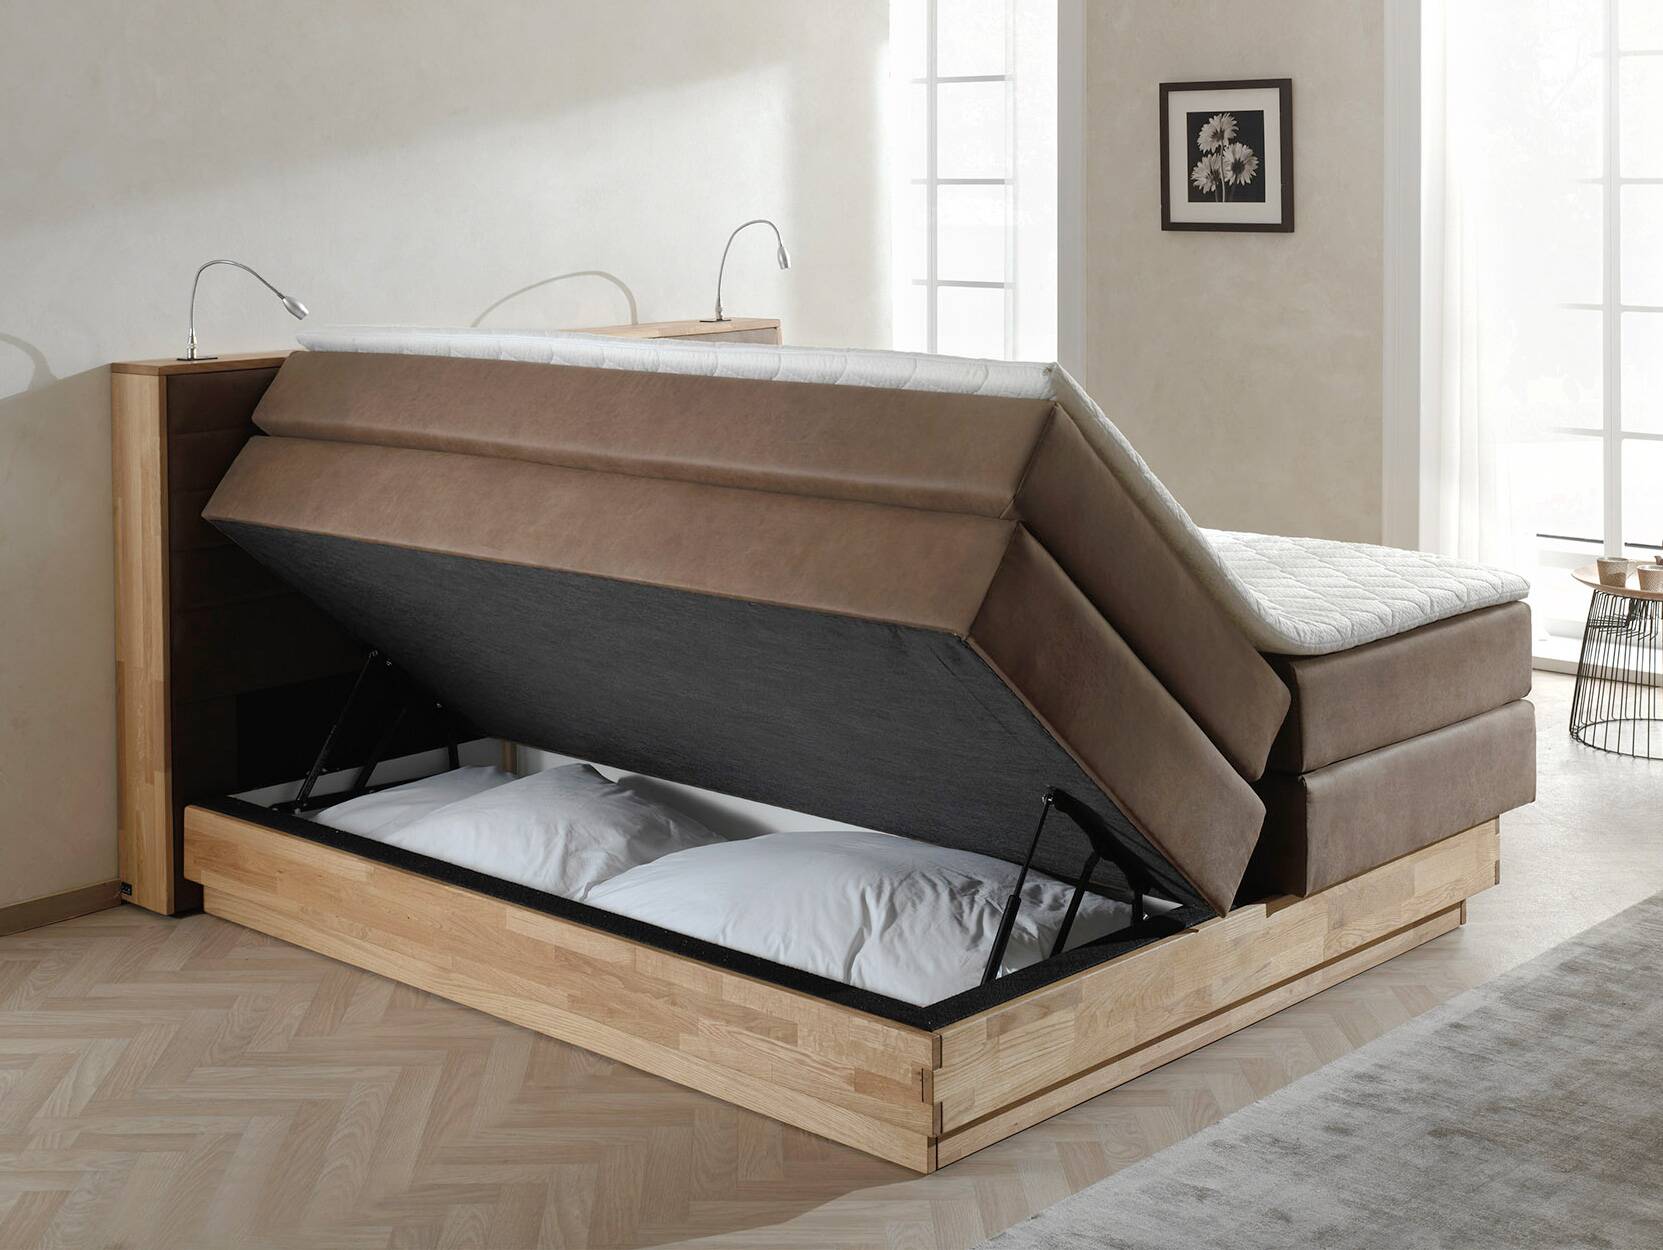 MENOTA Boxspringbett mit Bettkasten, massivem Holzrahmen und Bezug im Vintage Look 200 x 200 cm | braun | Härtegrad 2